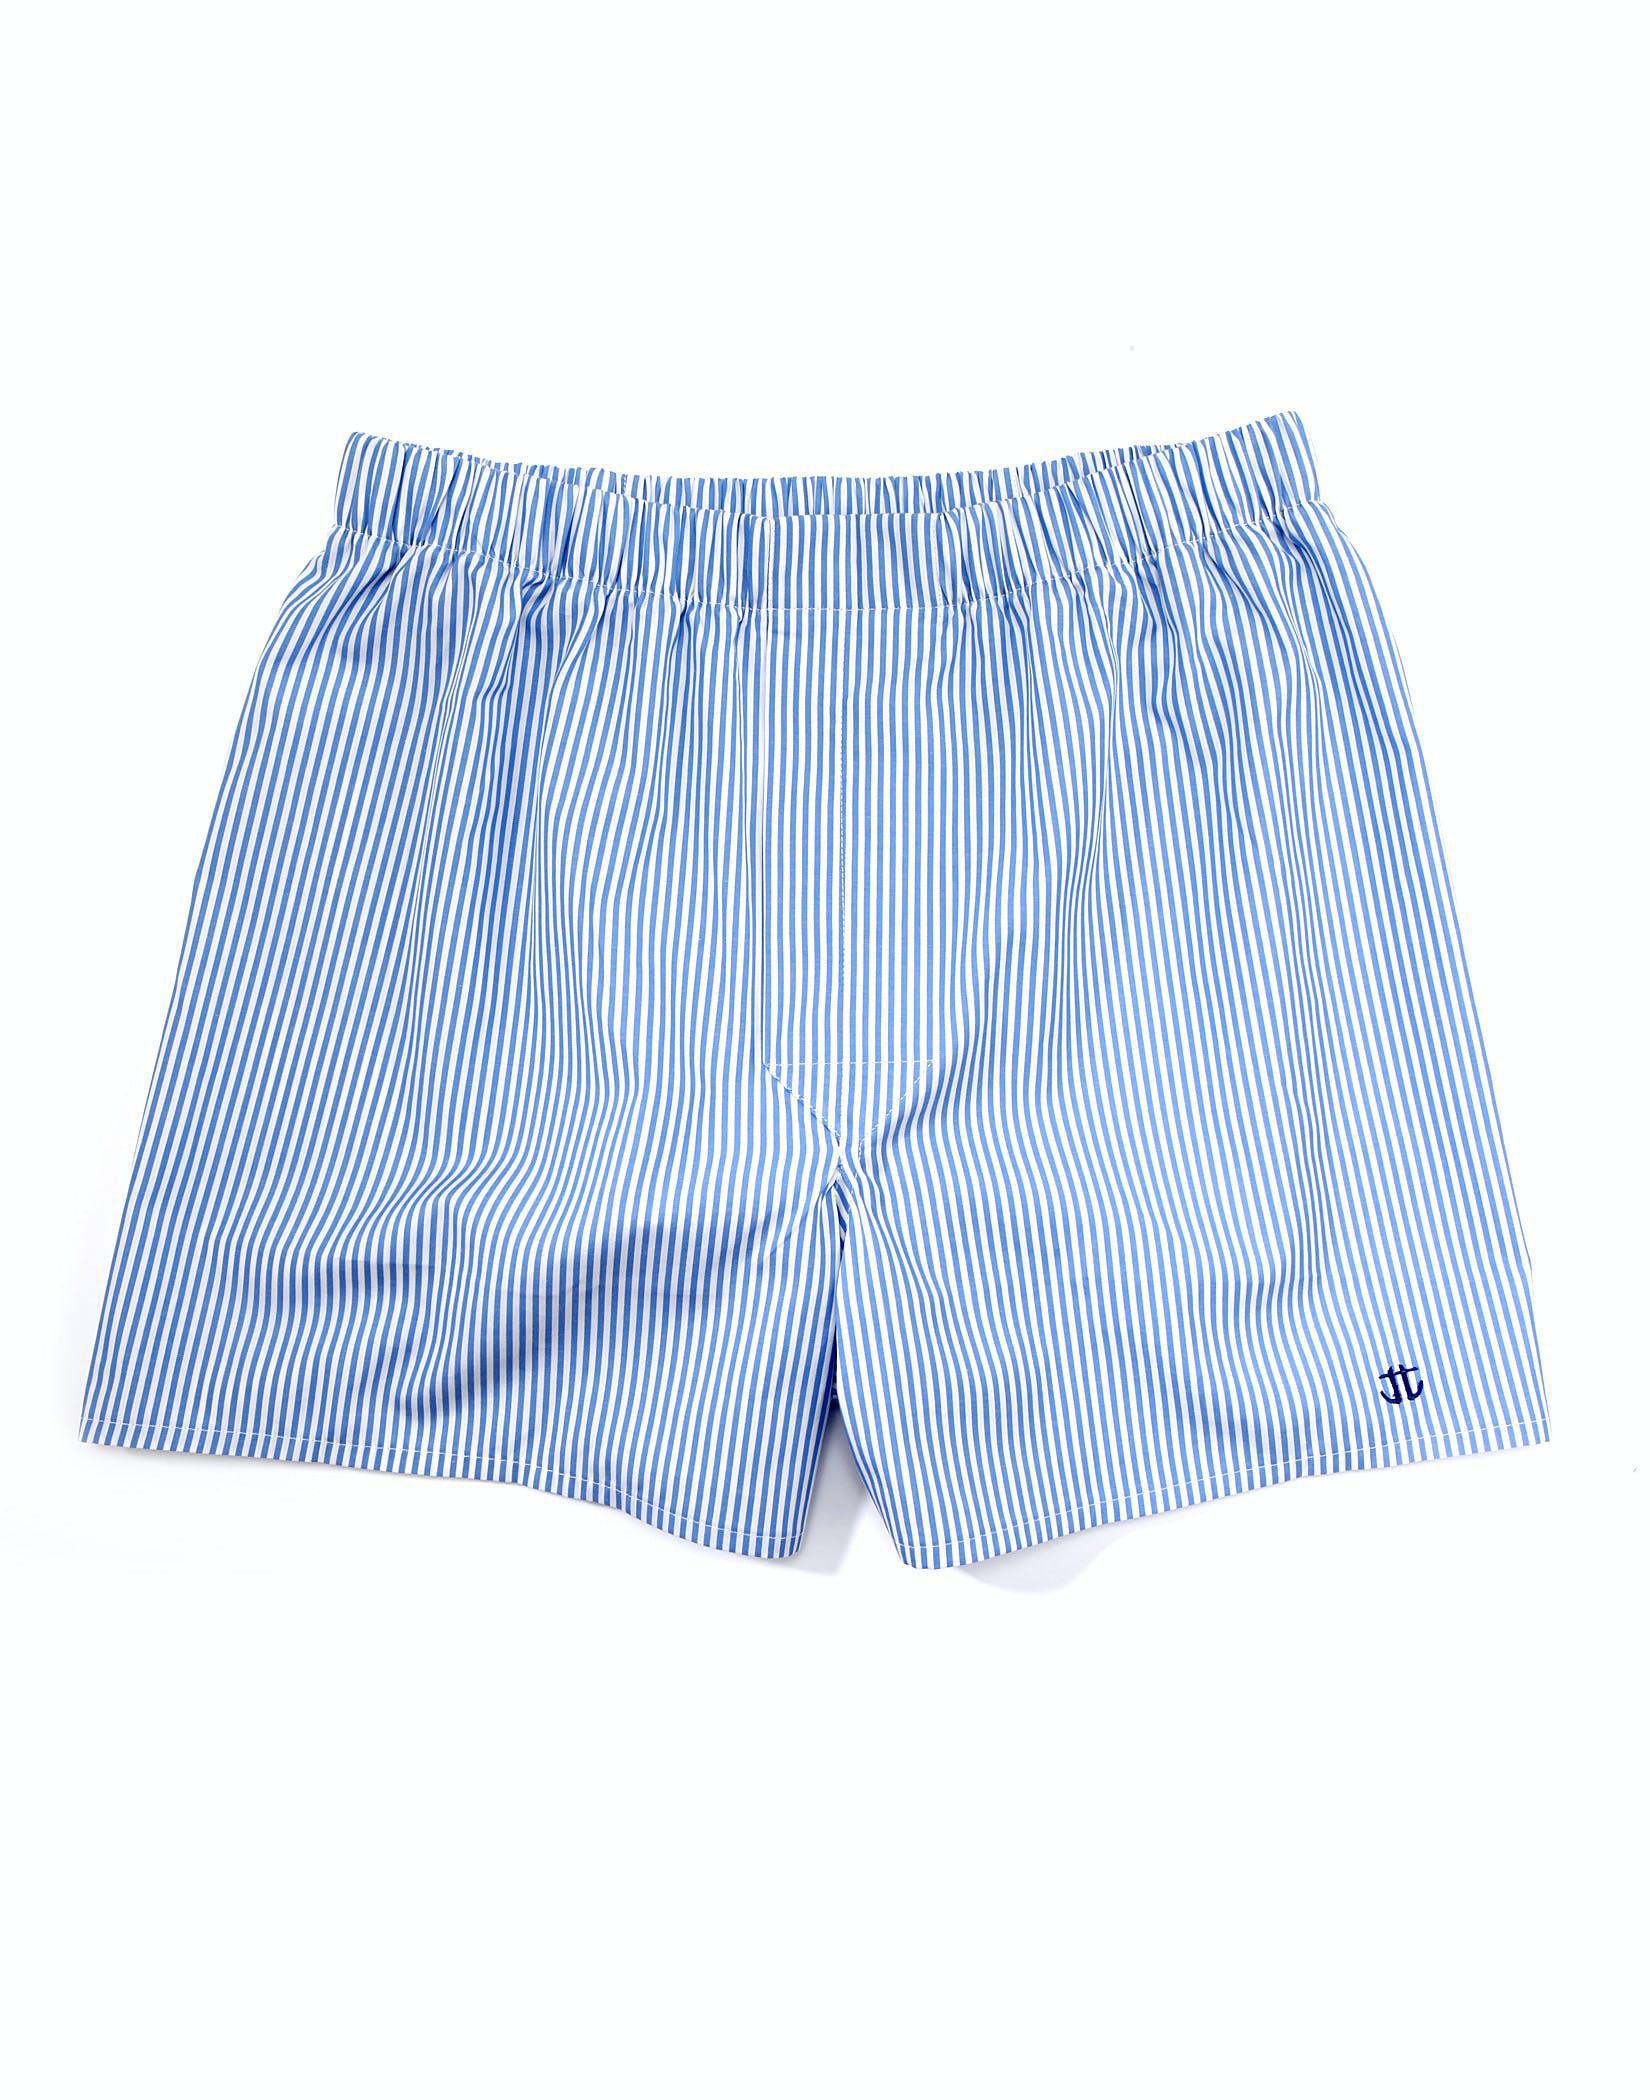 Boxer Shorts - Blue Bengal Stripe